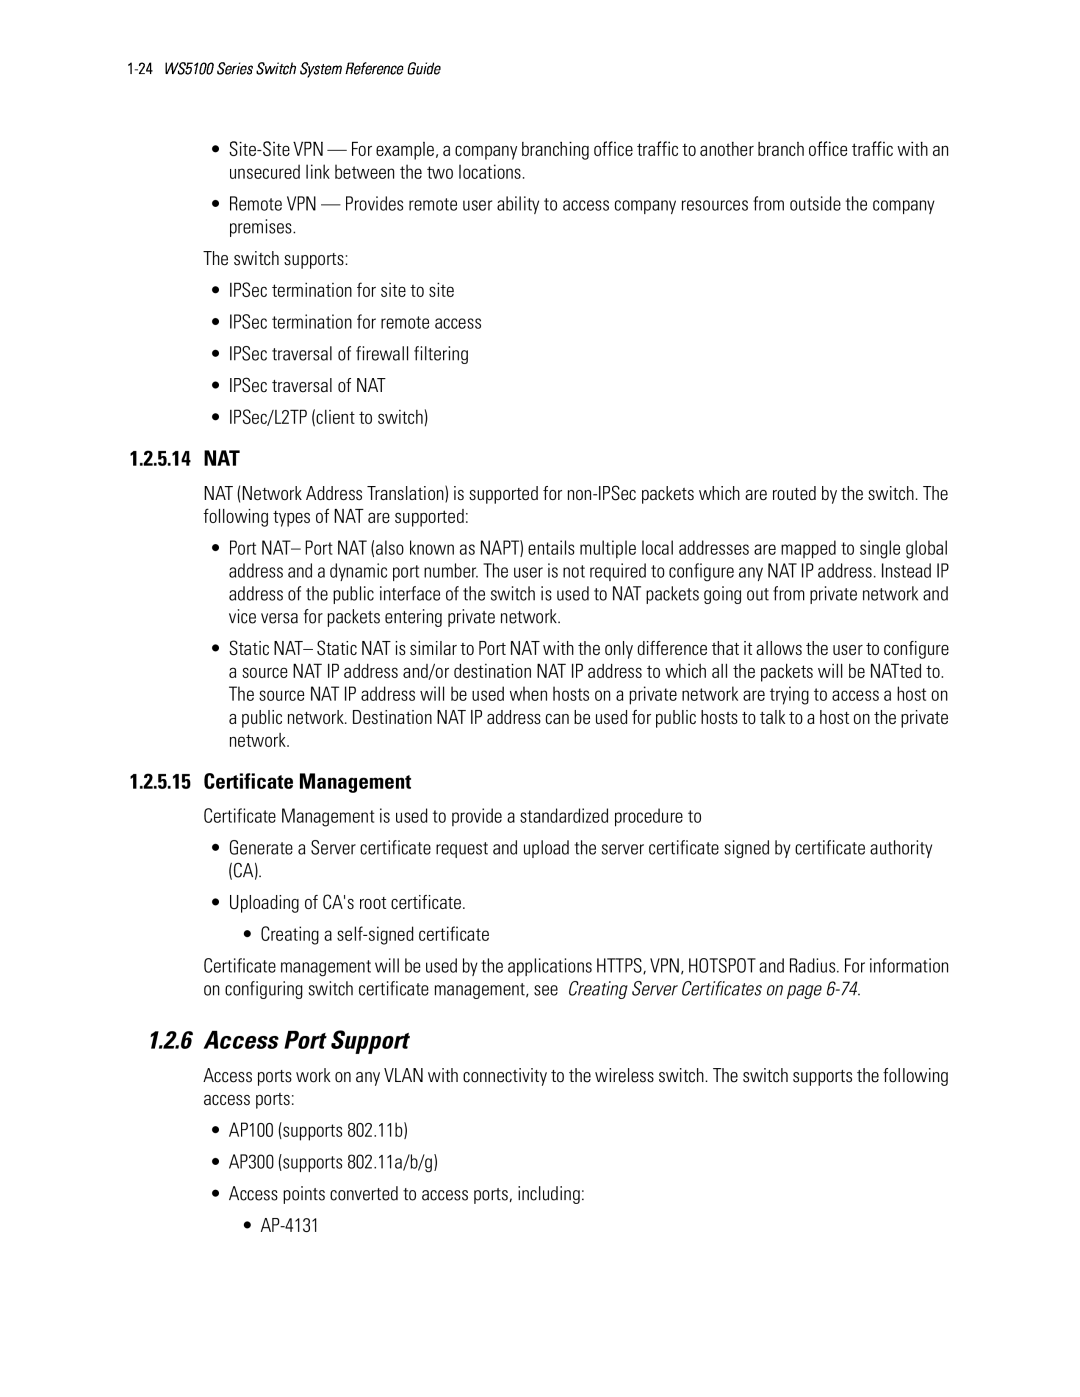 Motorola WS5100 manual Access Port Support, 1.2.5.14NAT, 1.2.5.15Certificate Management 